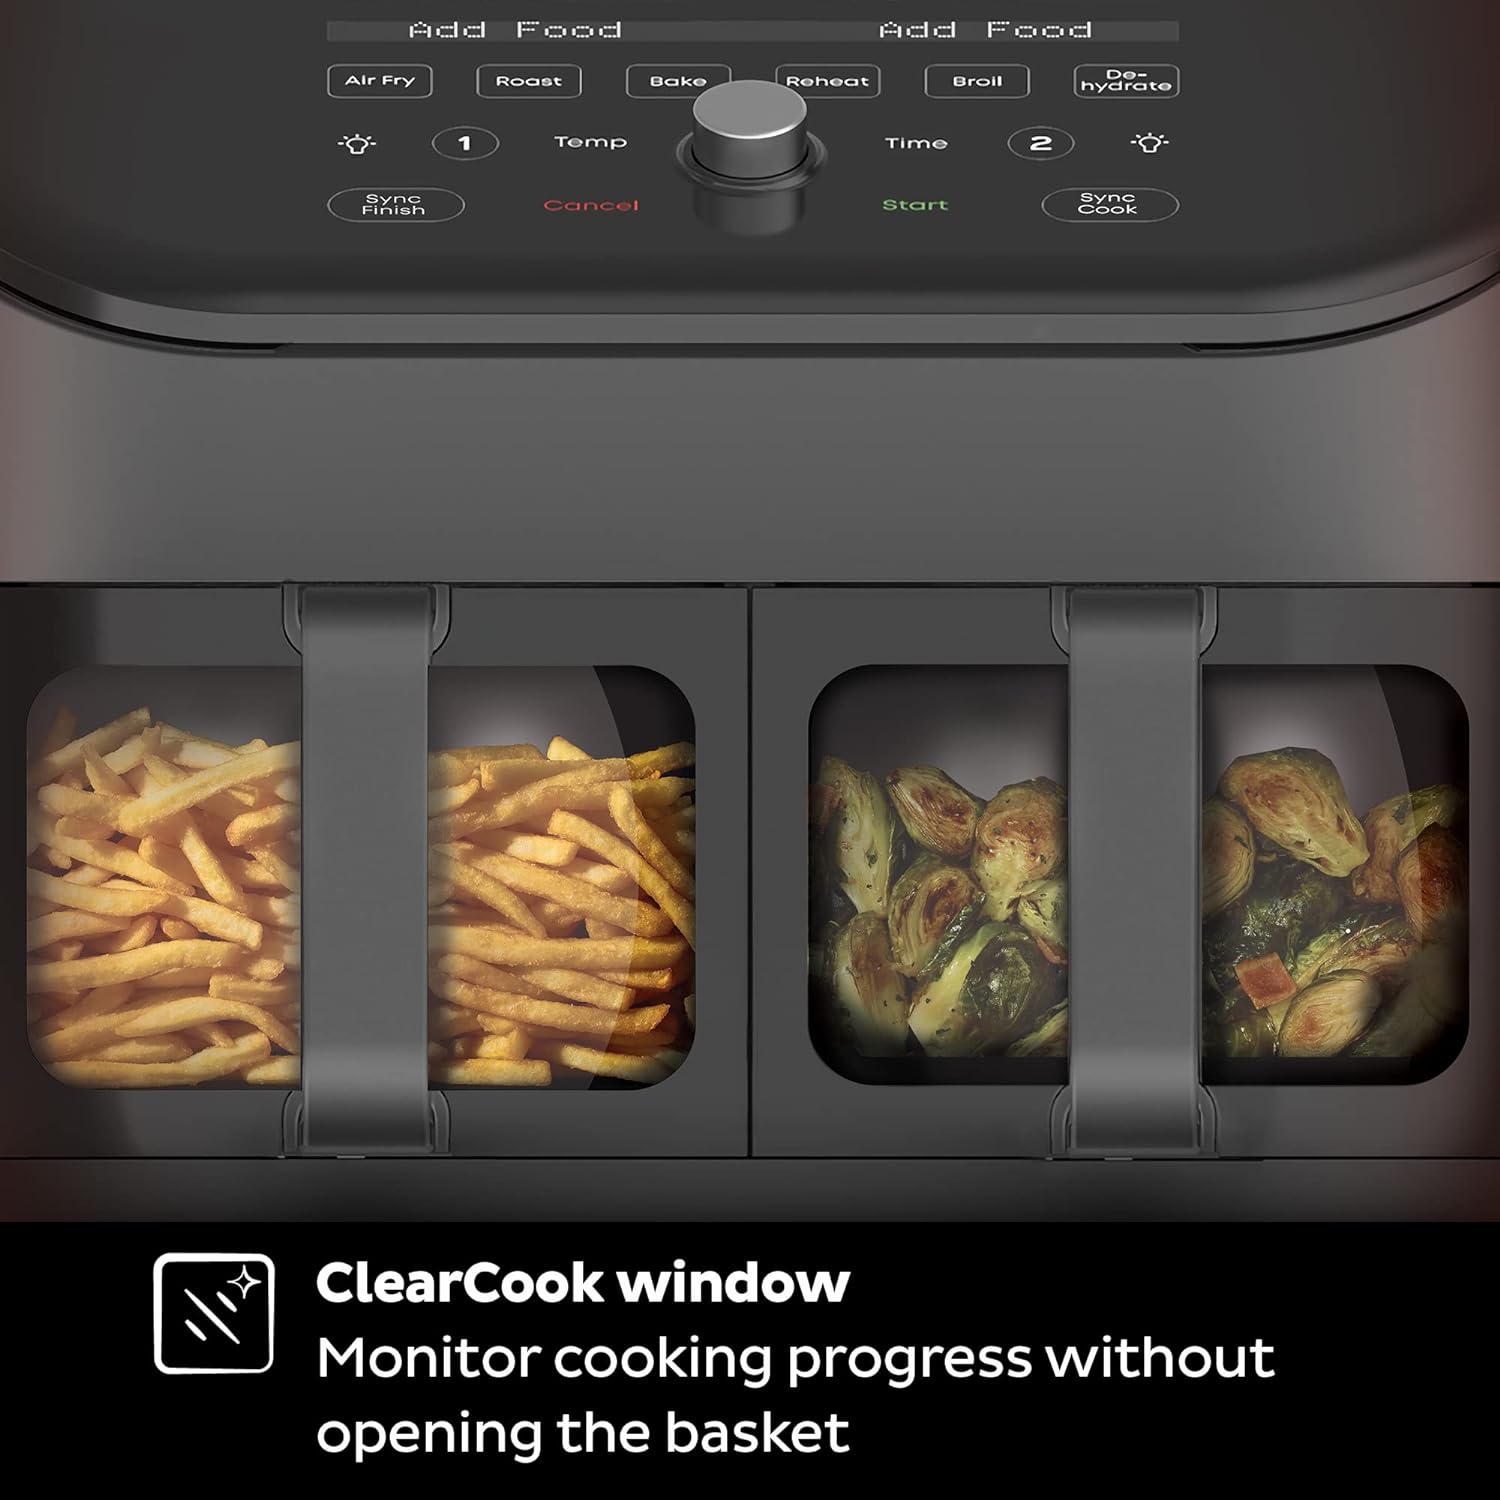 Instant Pot Vortex Plus 6-in-1 Air Fryer Oven Review